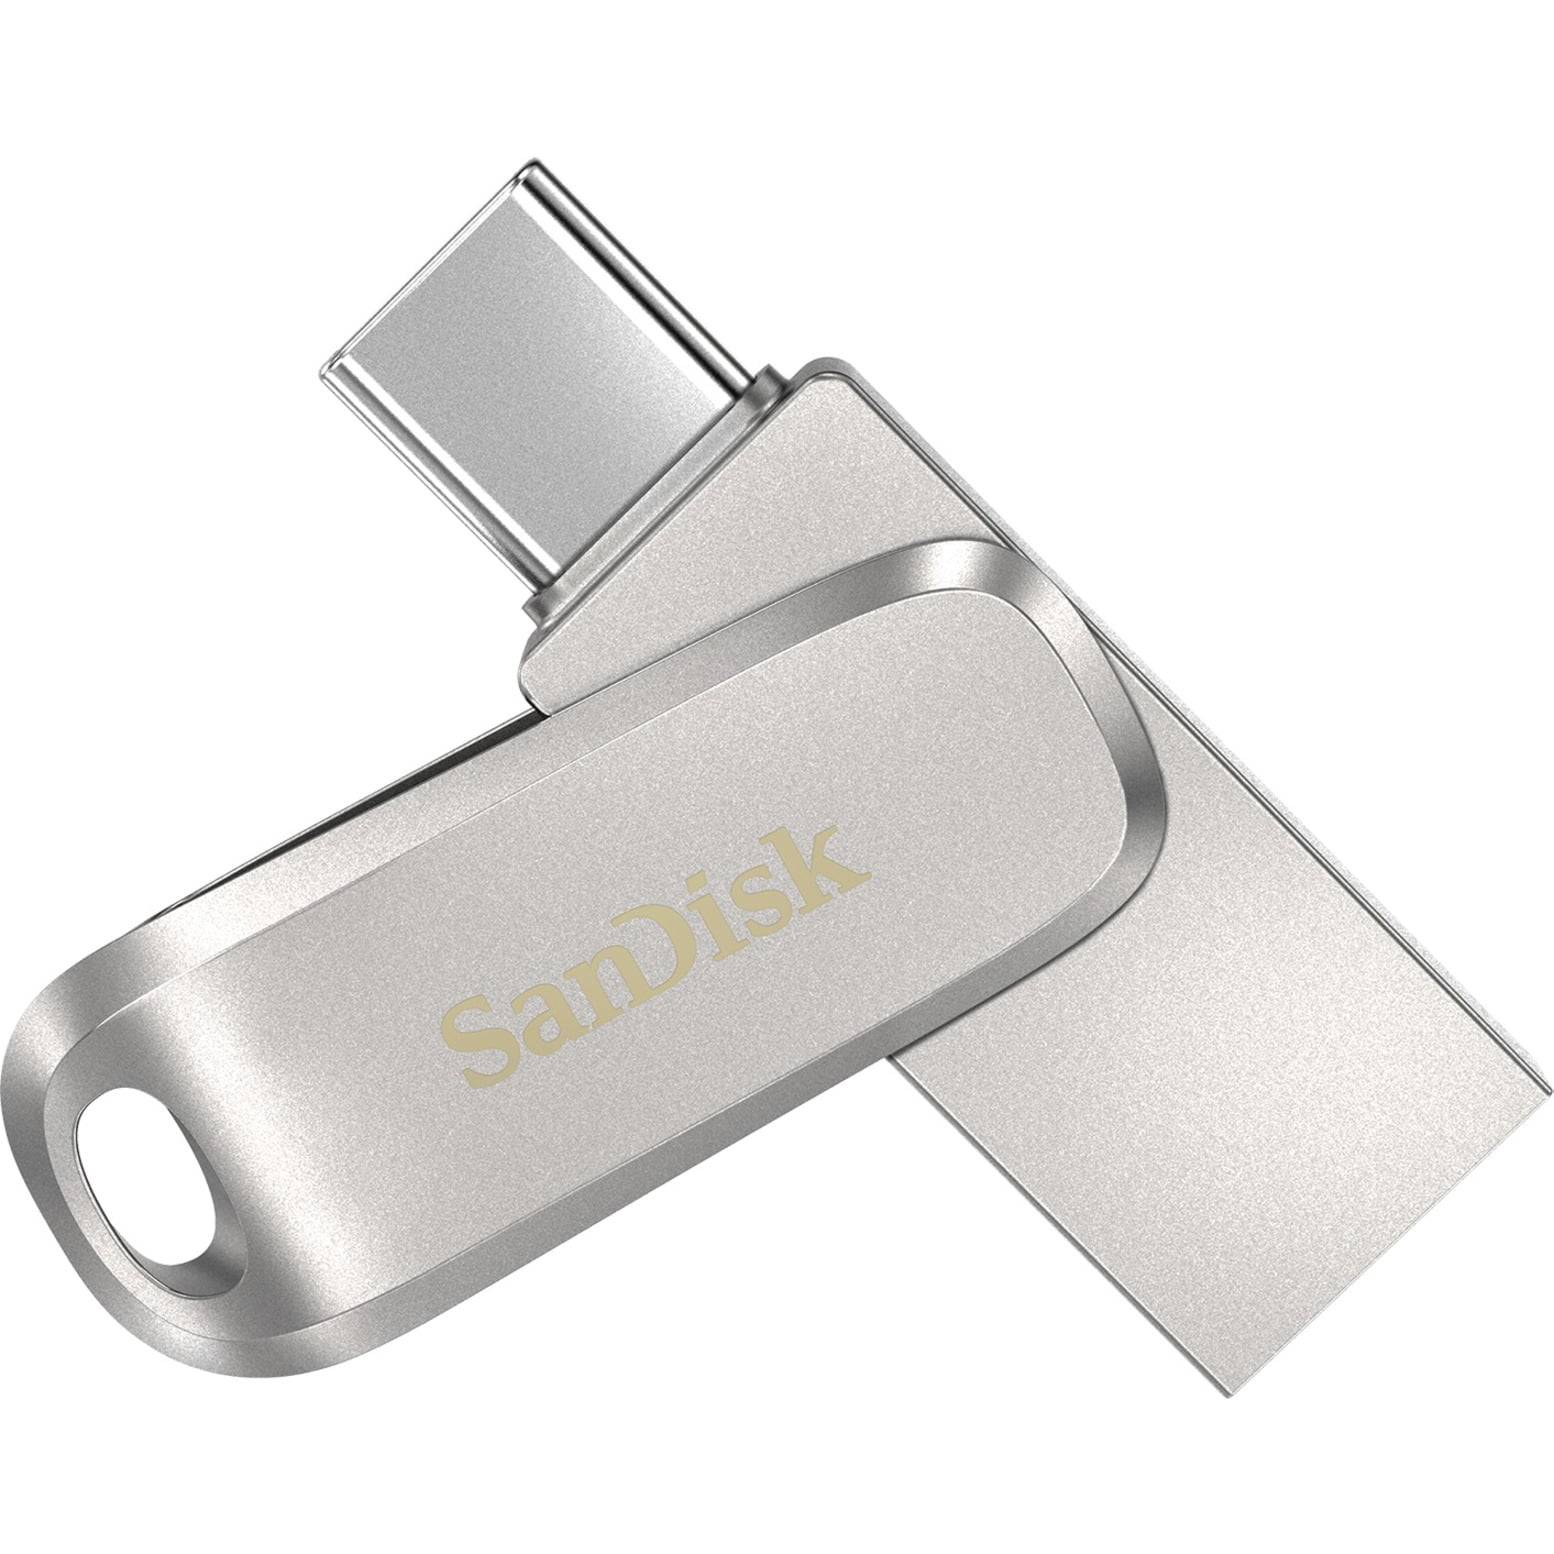 Flash Drive 4GB USB 2.0 Port by Caliber